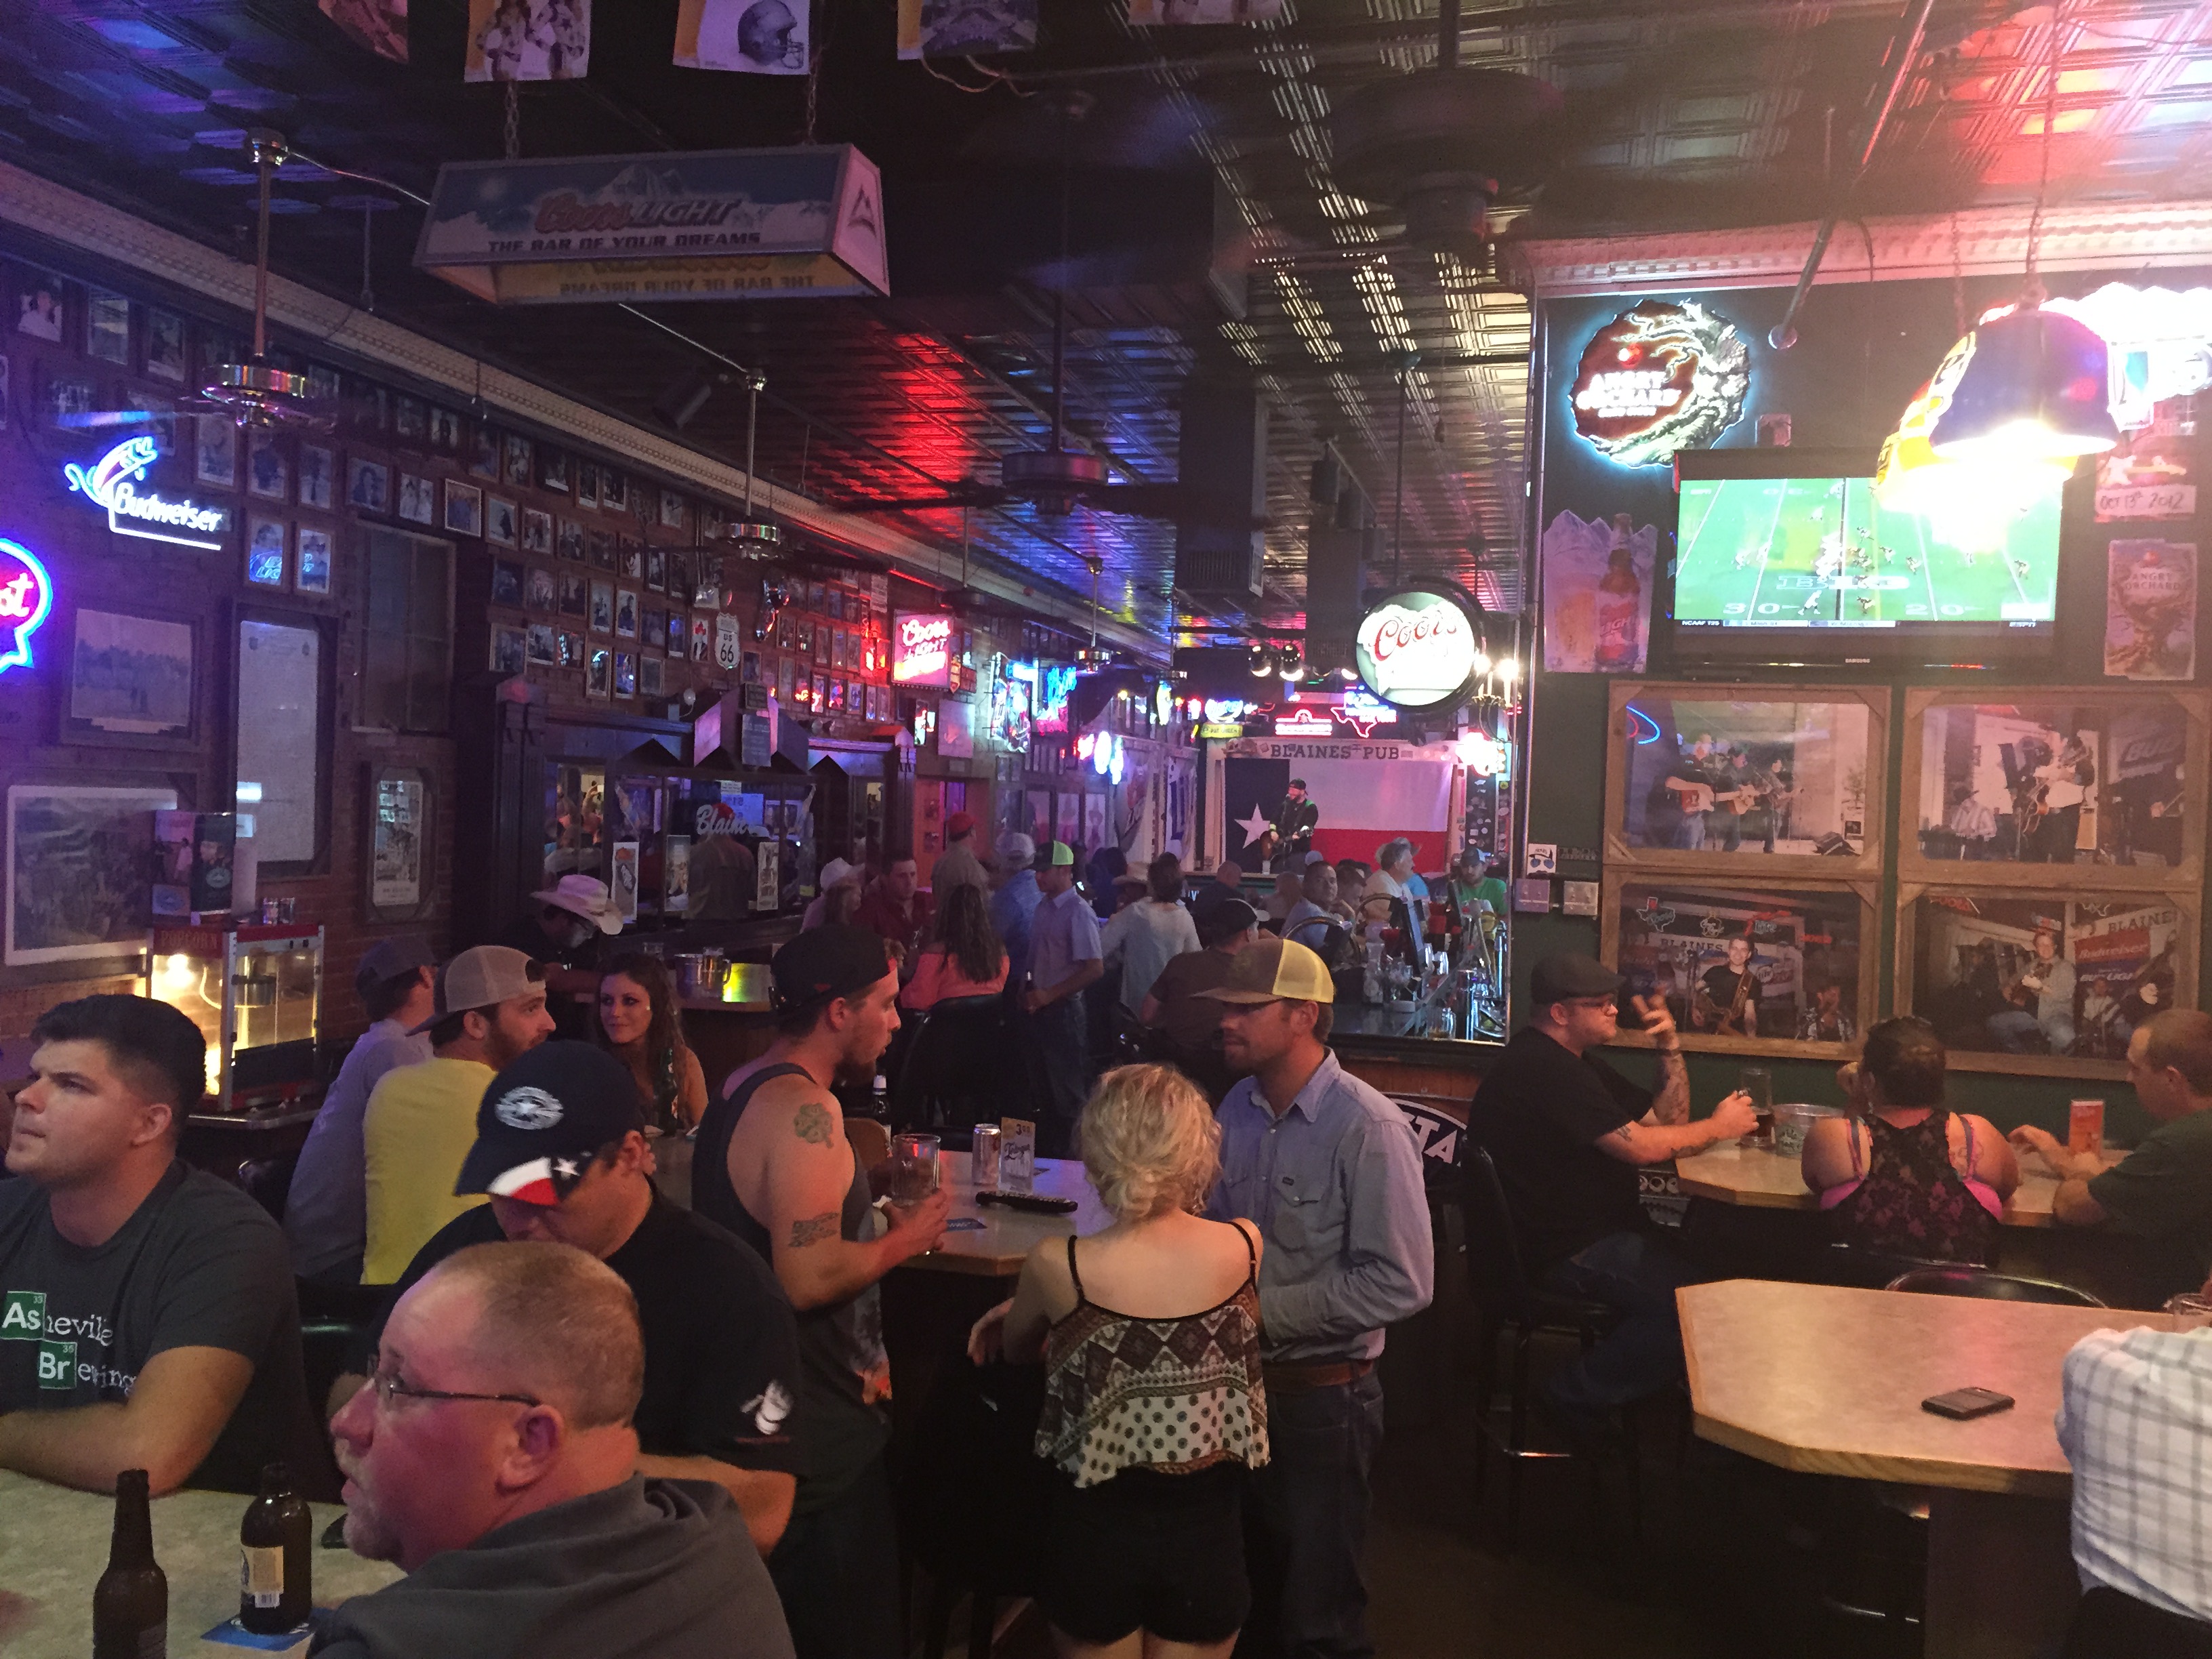 Blaine's Pub in San Angelo, Texas is a storied live music venue